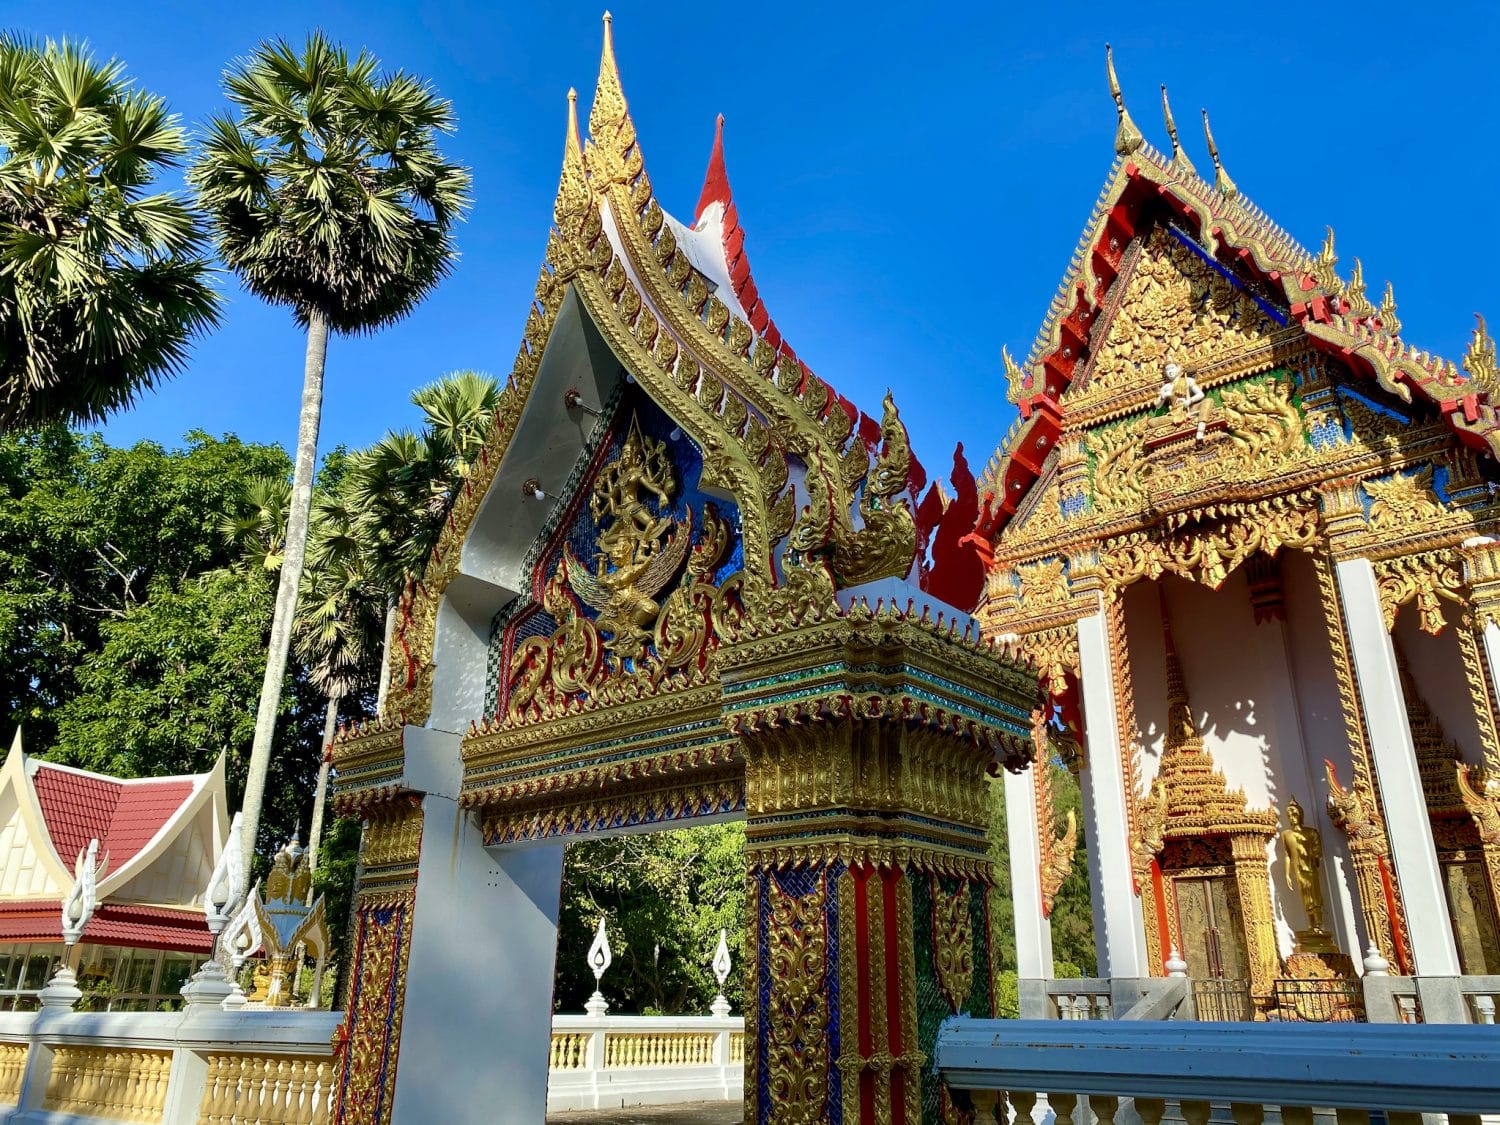 Sights on Phuket – my tips & experiences